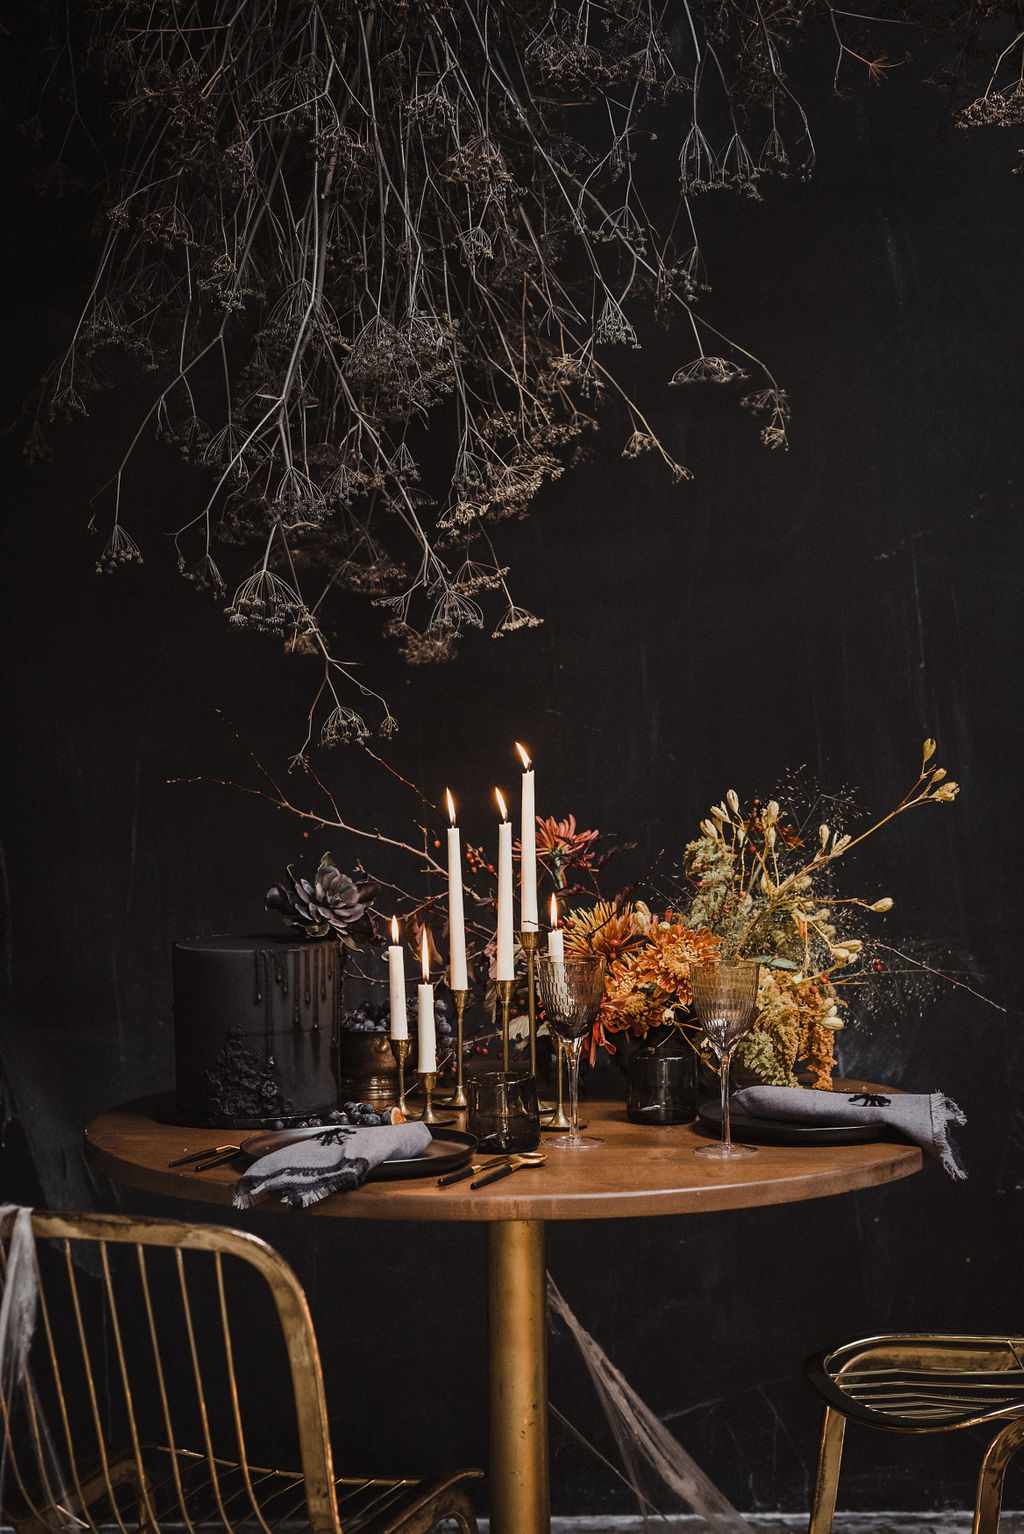 A Halloween Dinner by Candlelight Proves Eerily Elegant | Martha Stewart